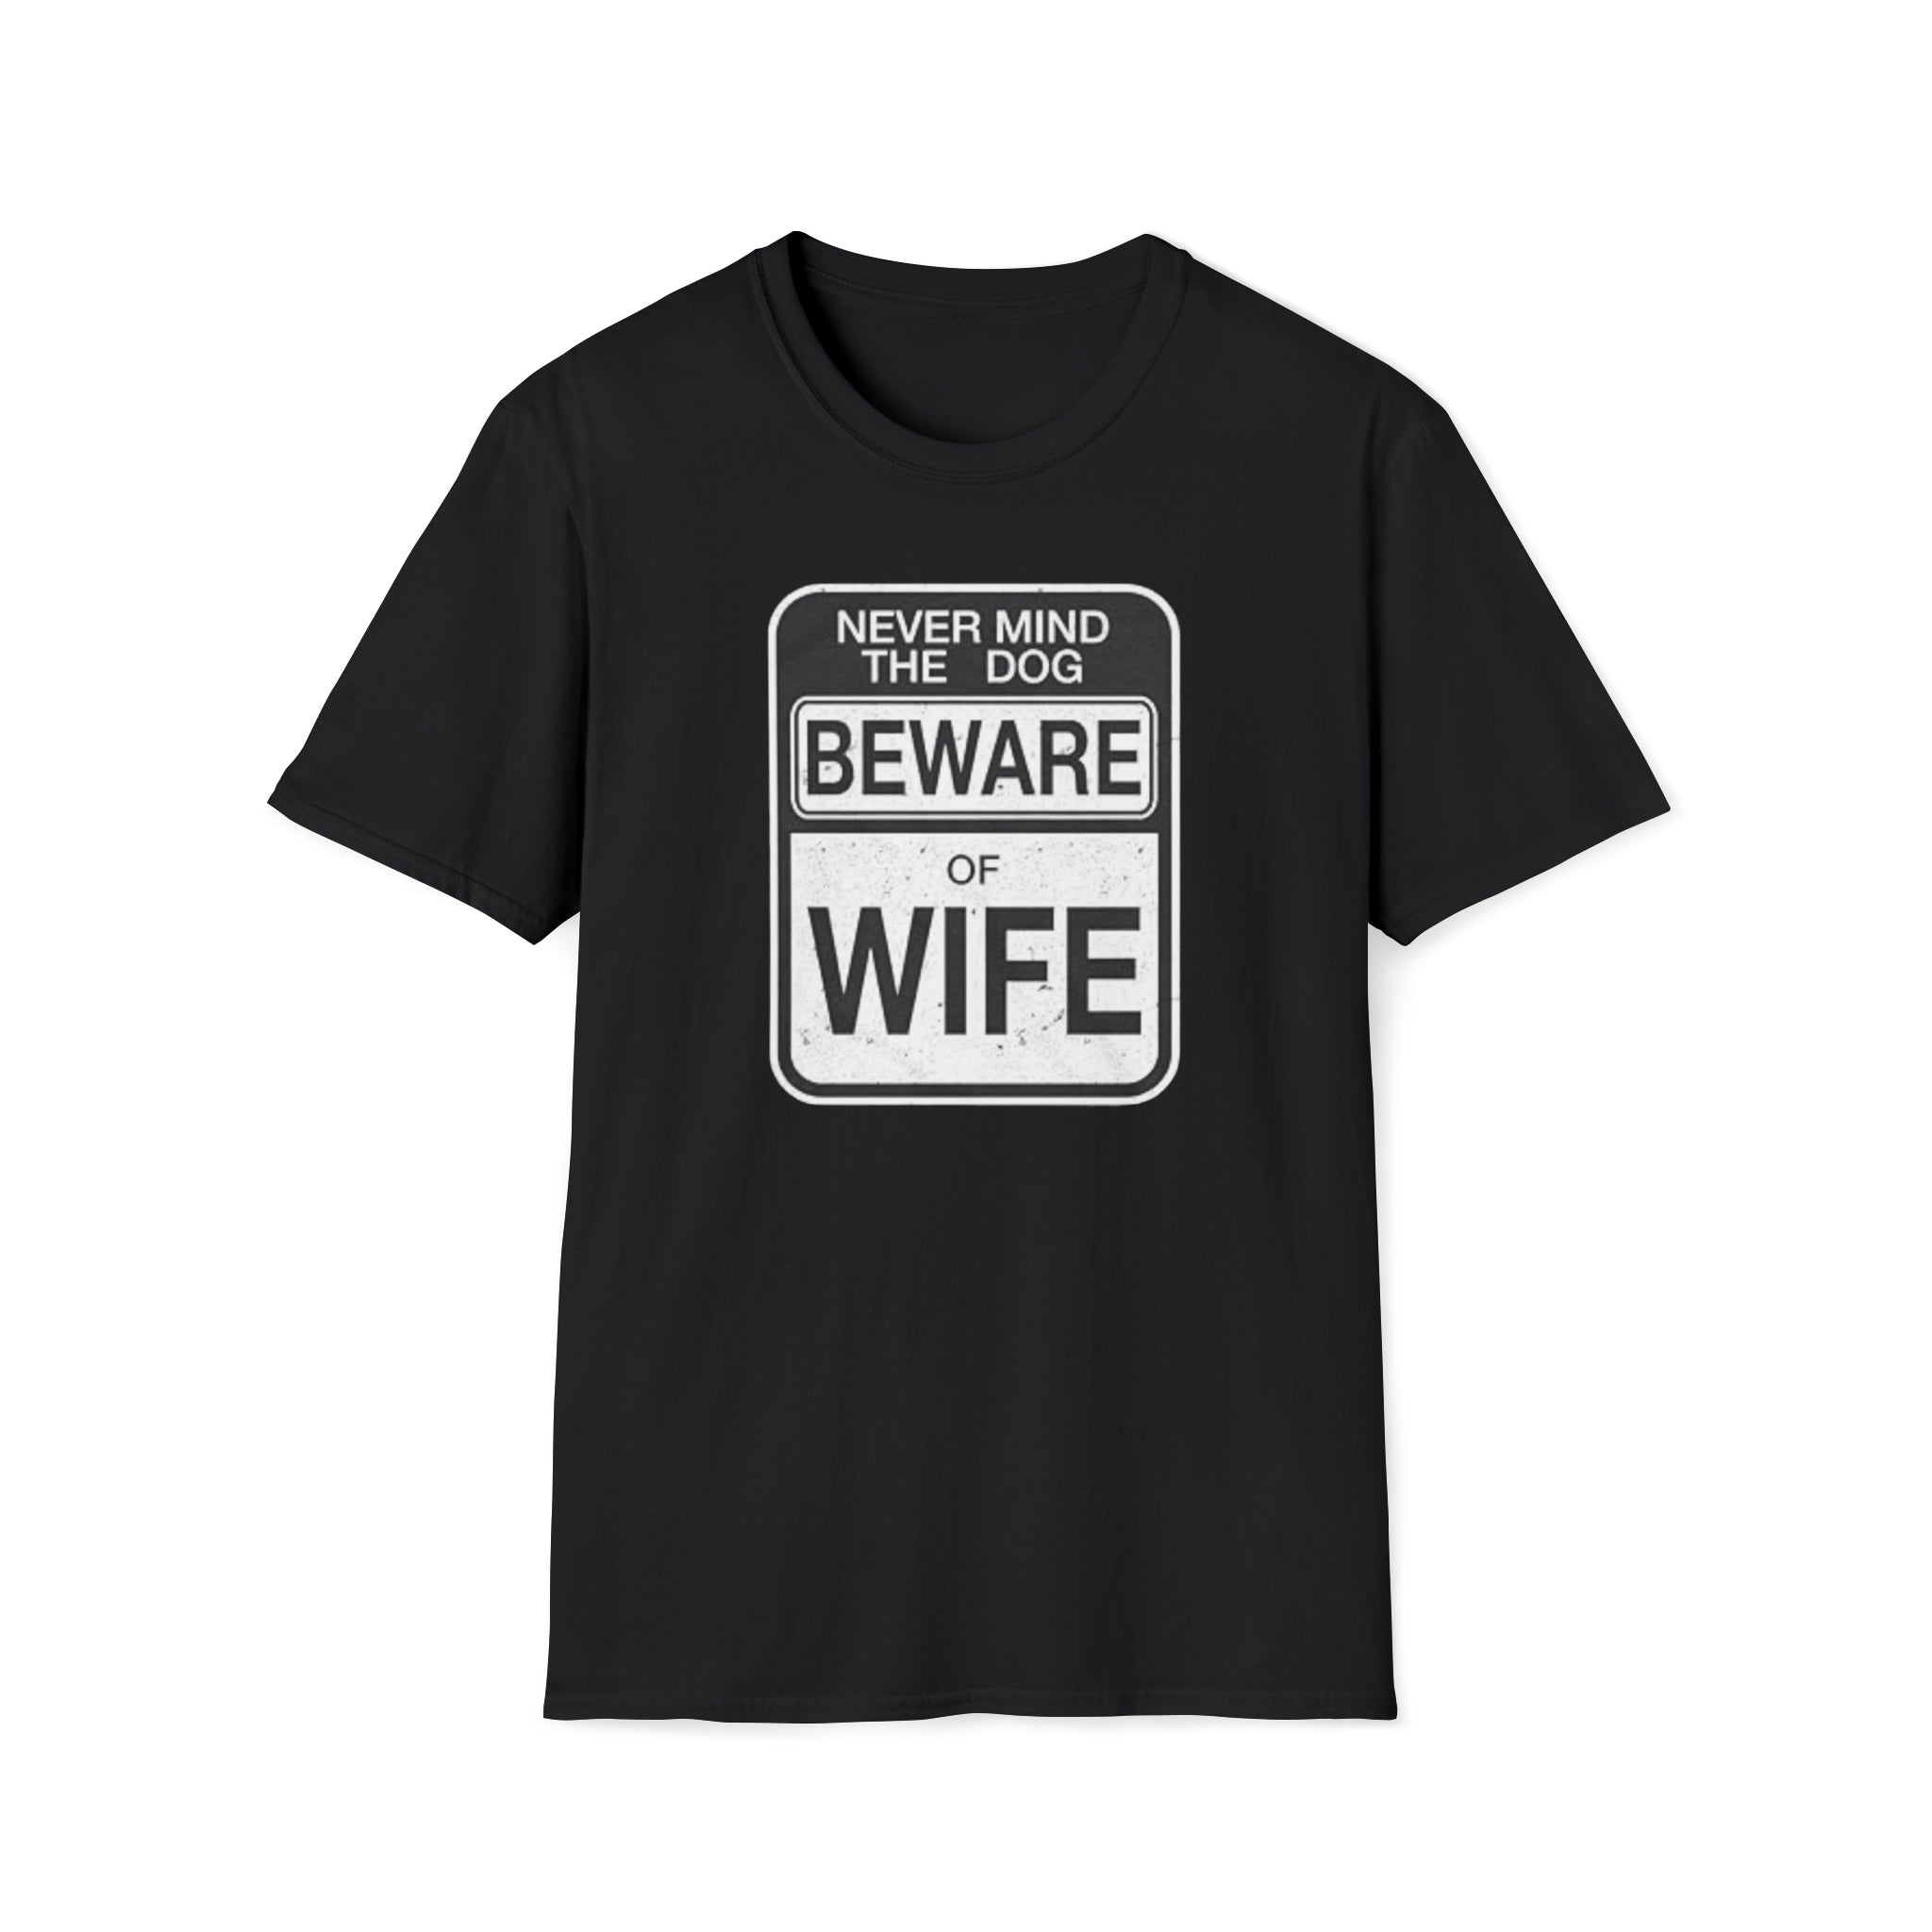 Beware of Wife T-Shirt